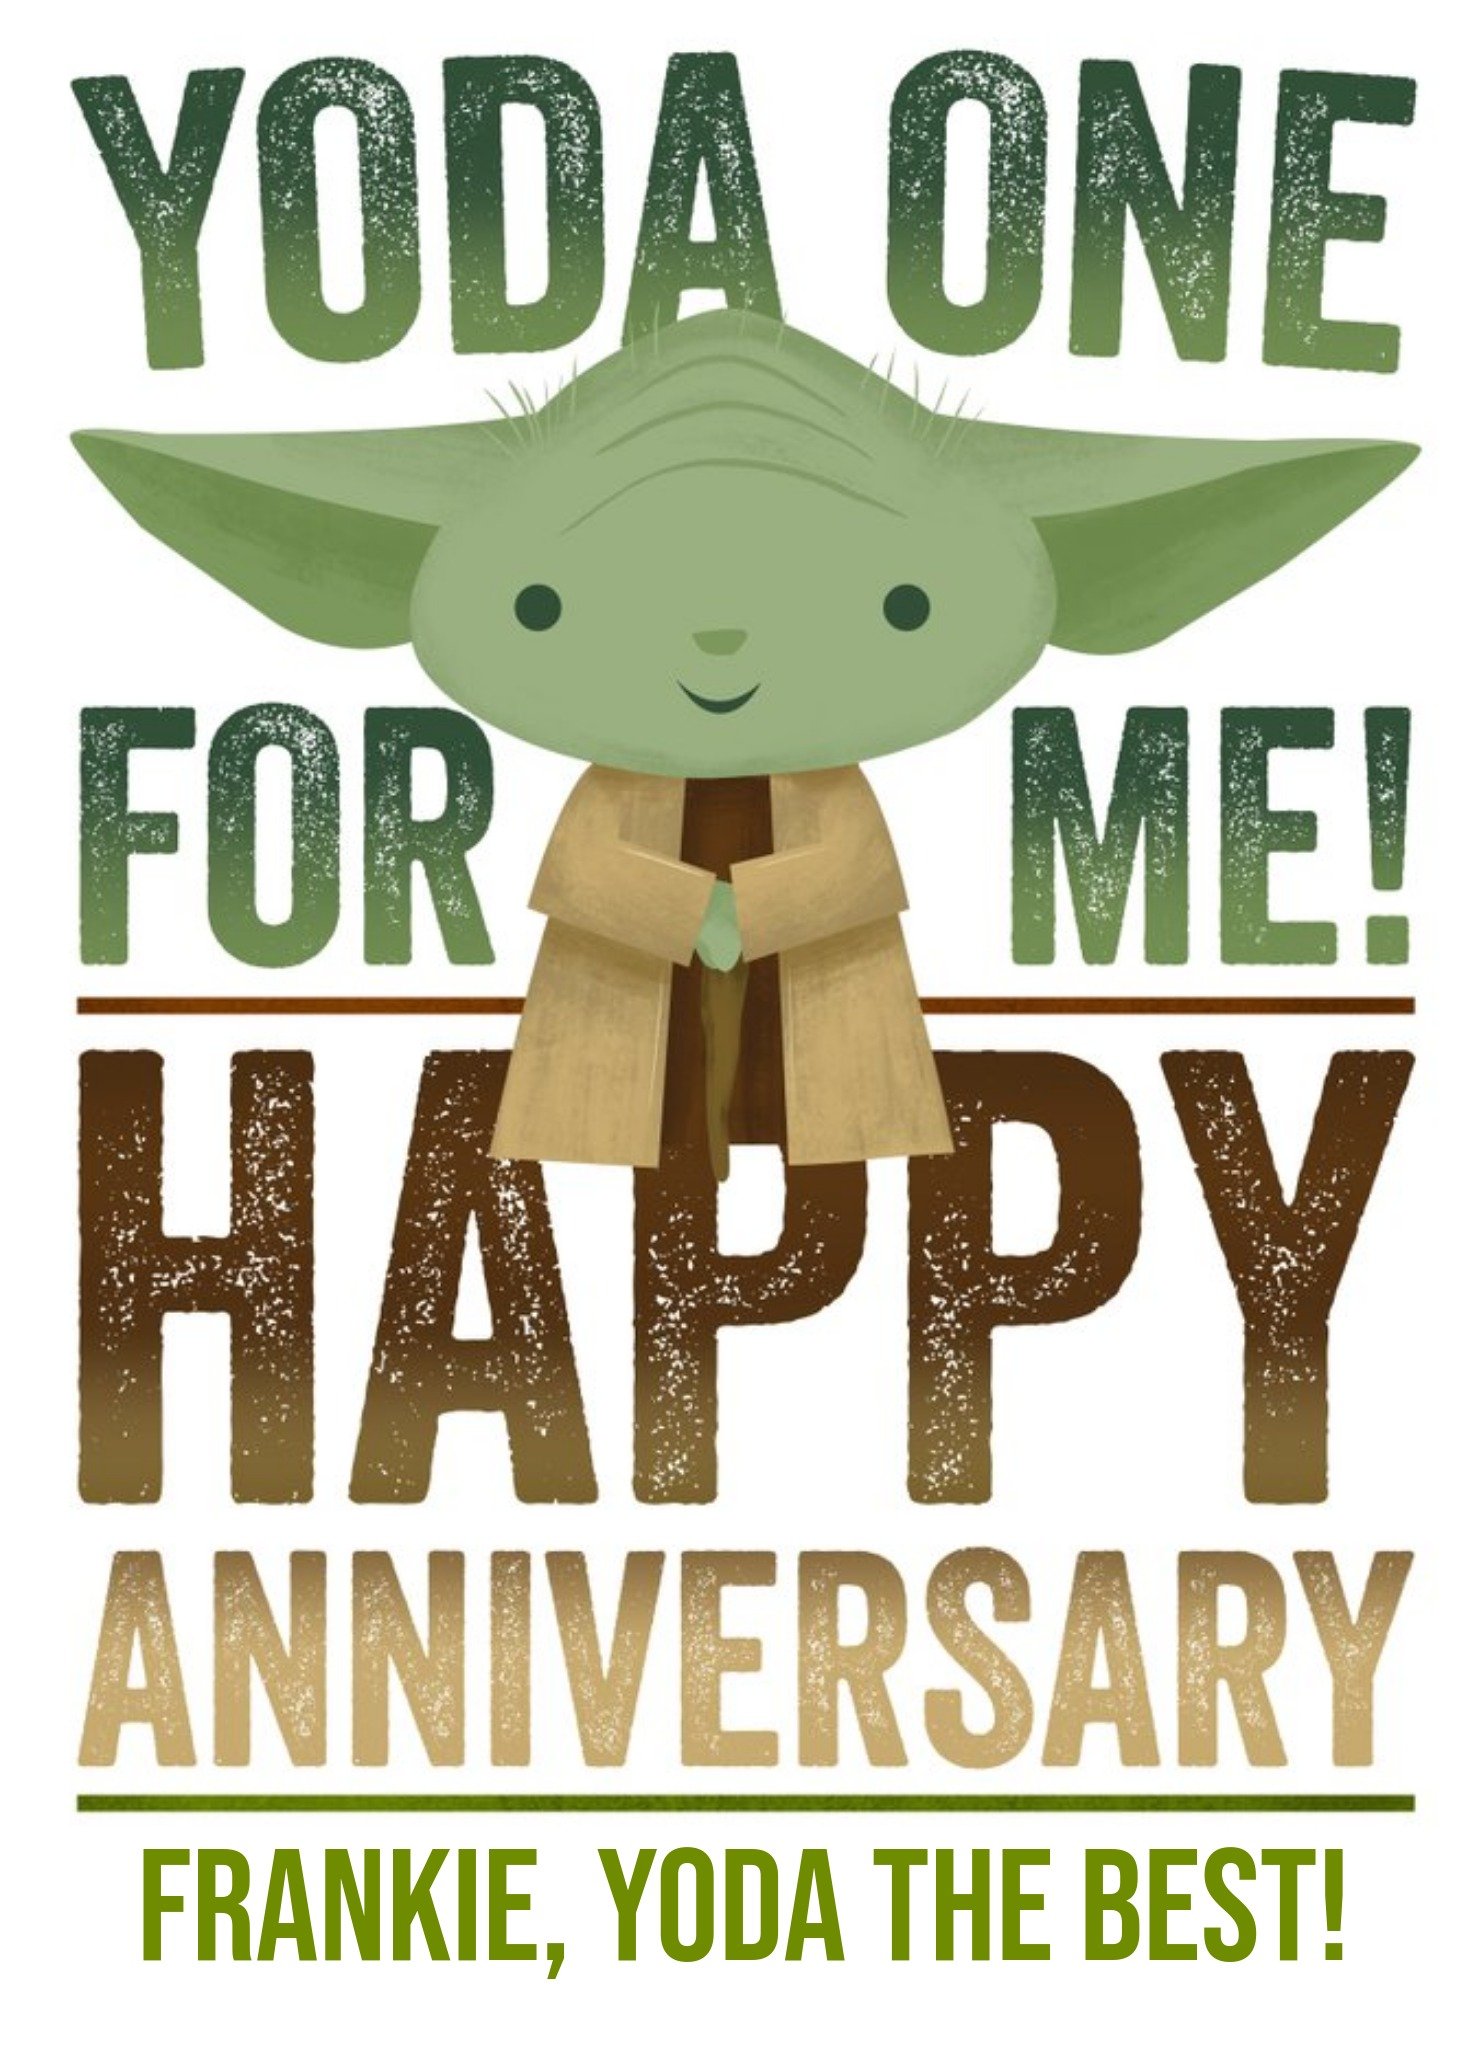 Disney Star Wars Baby, Yoda The One For Me. Yoda The Bestt Anniversary Card Ecard